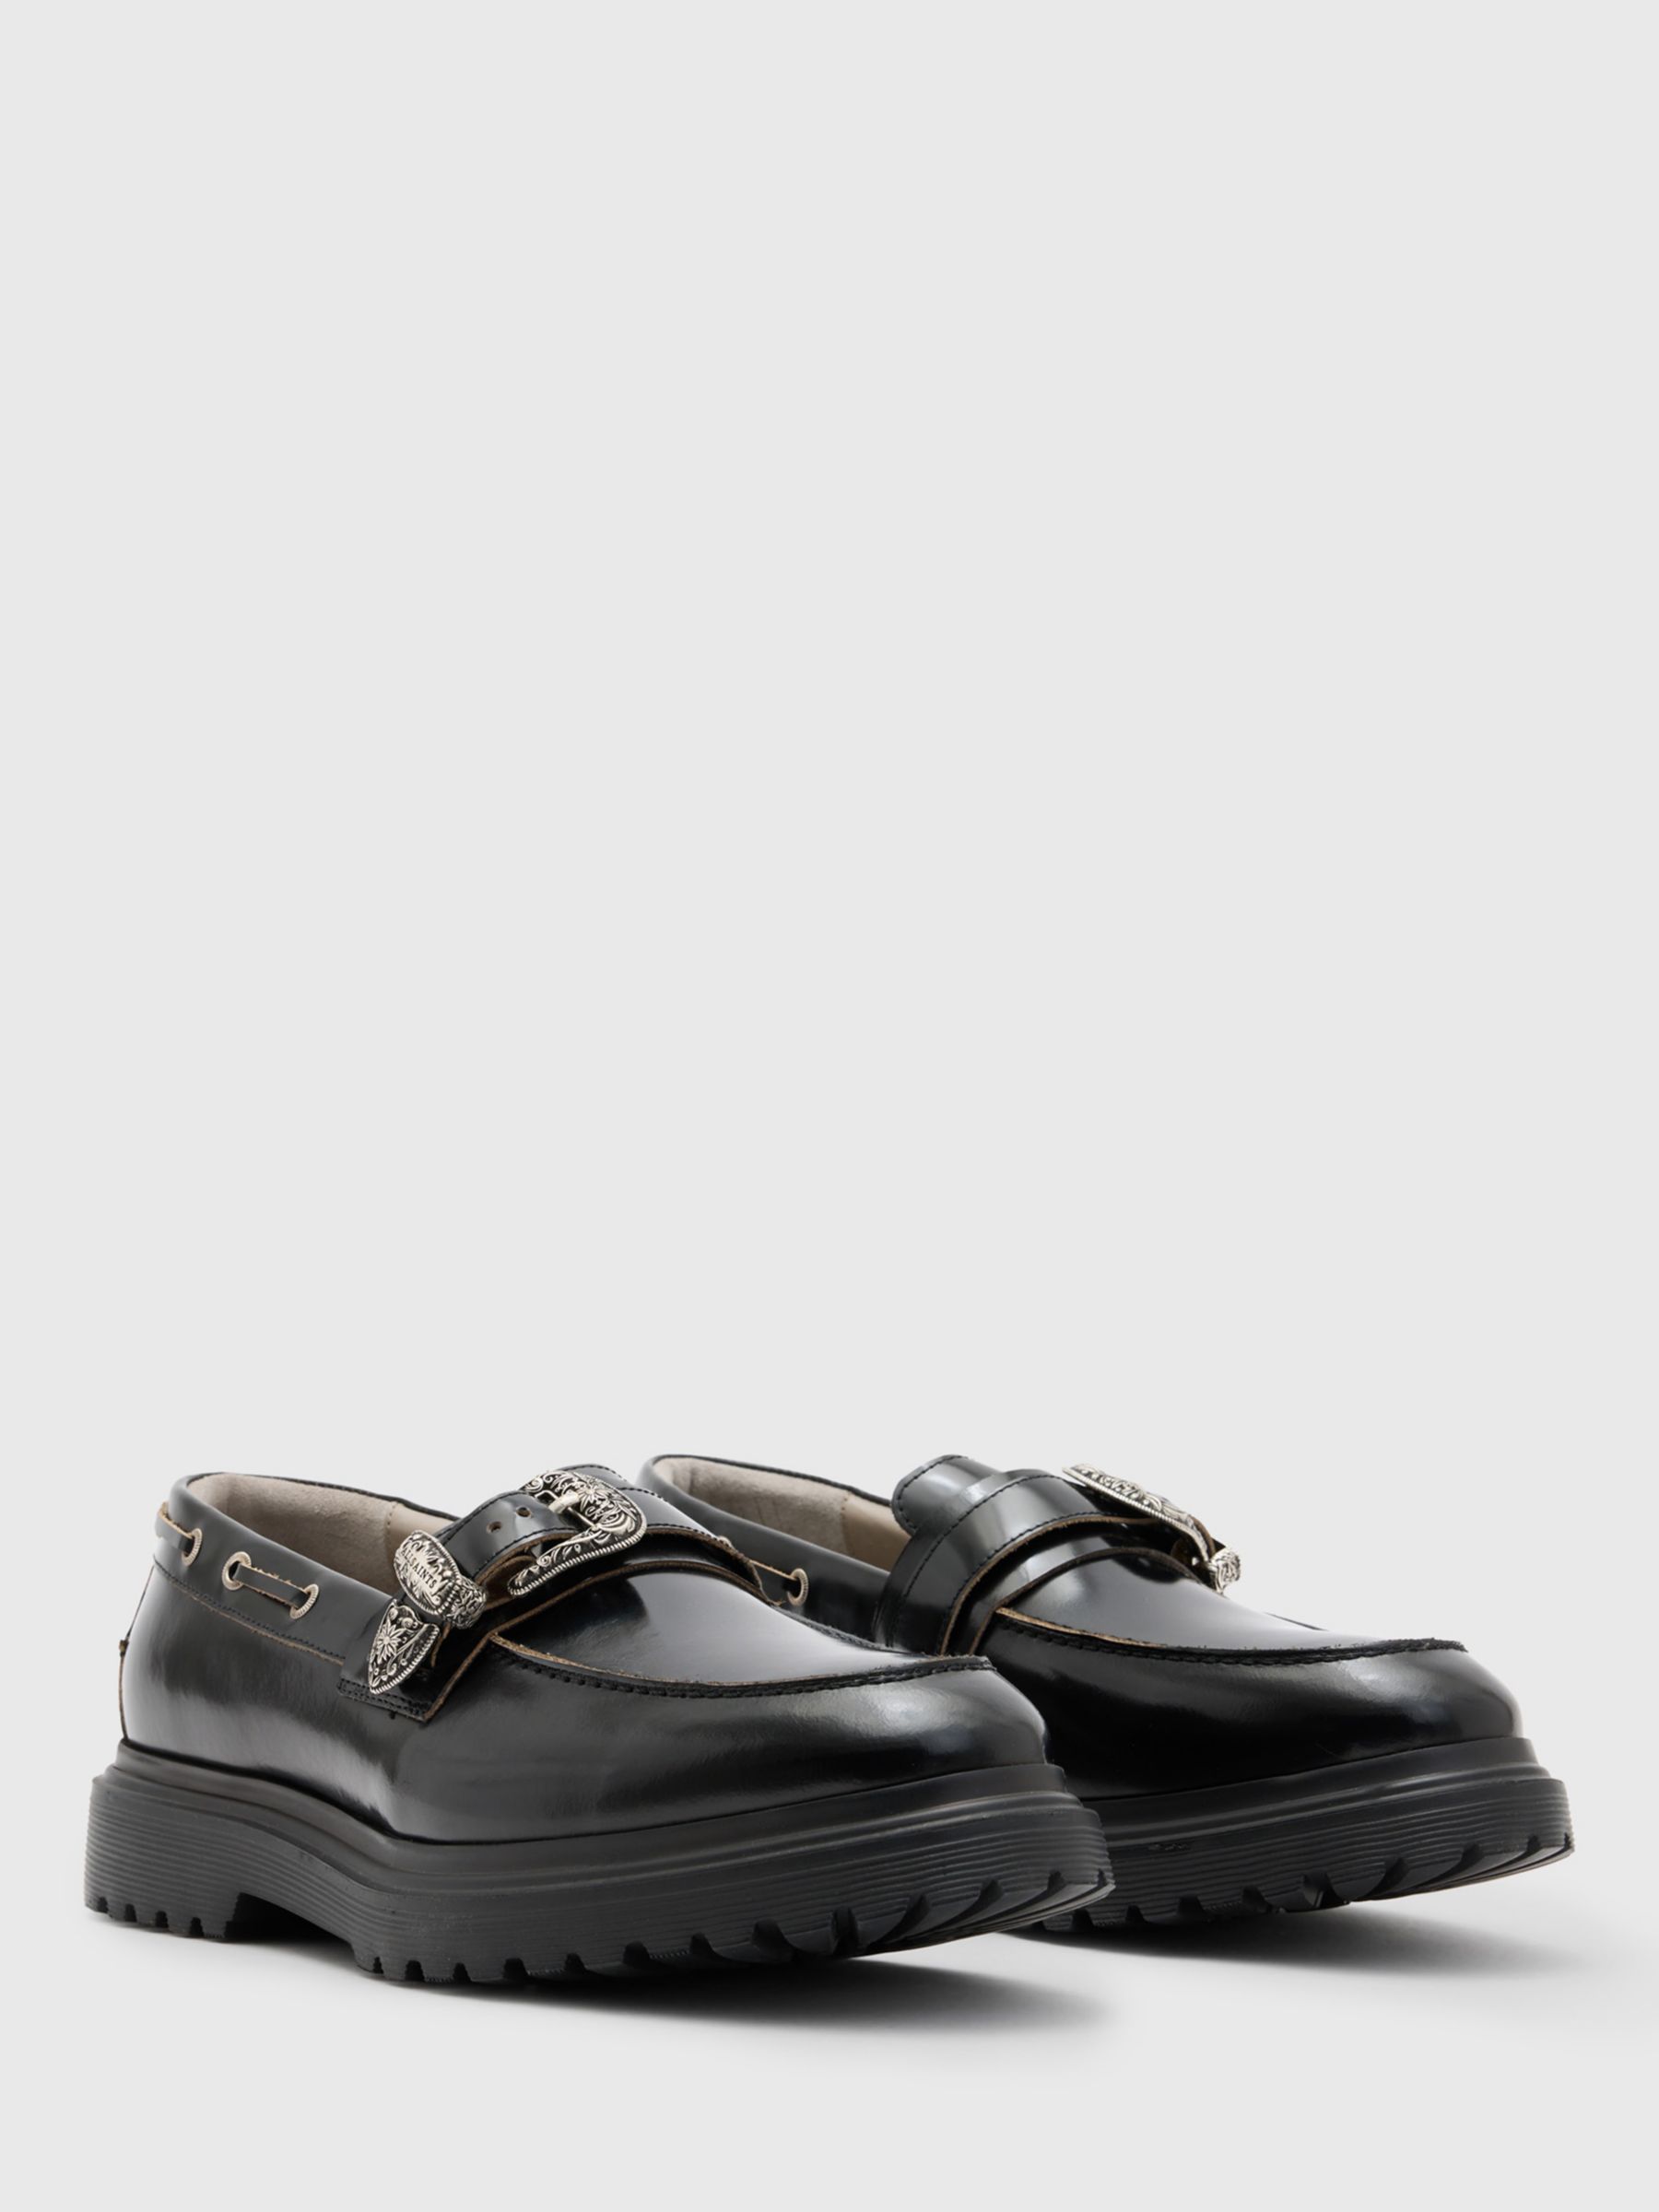 AllSaints Hanbury Loafers, Black, 10